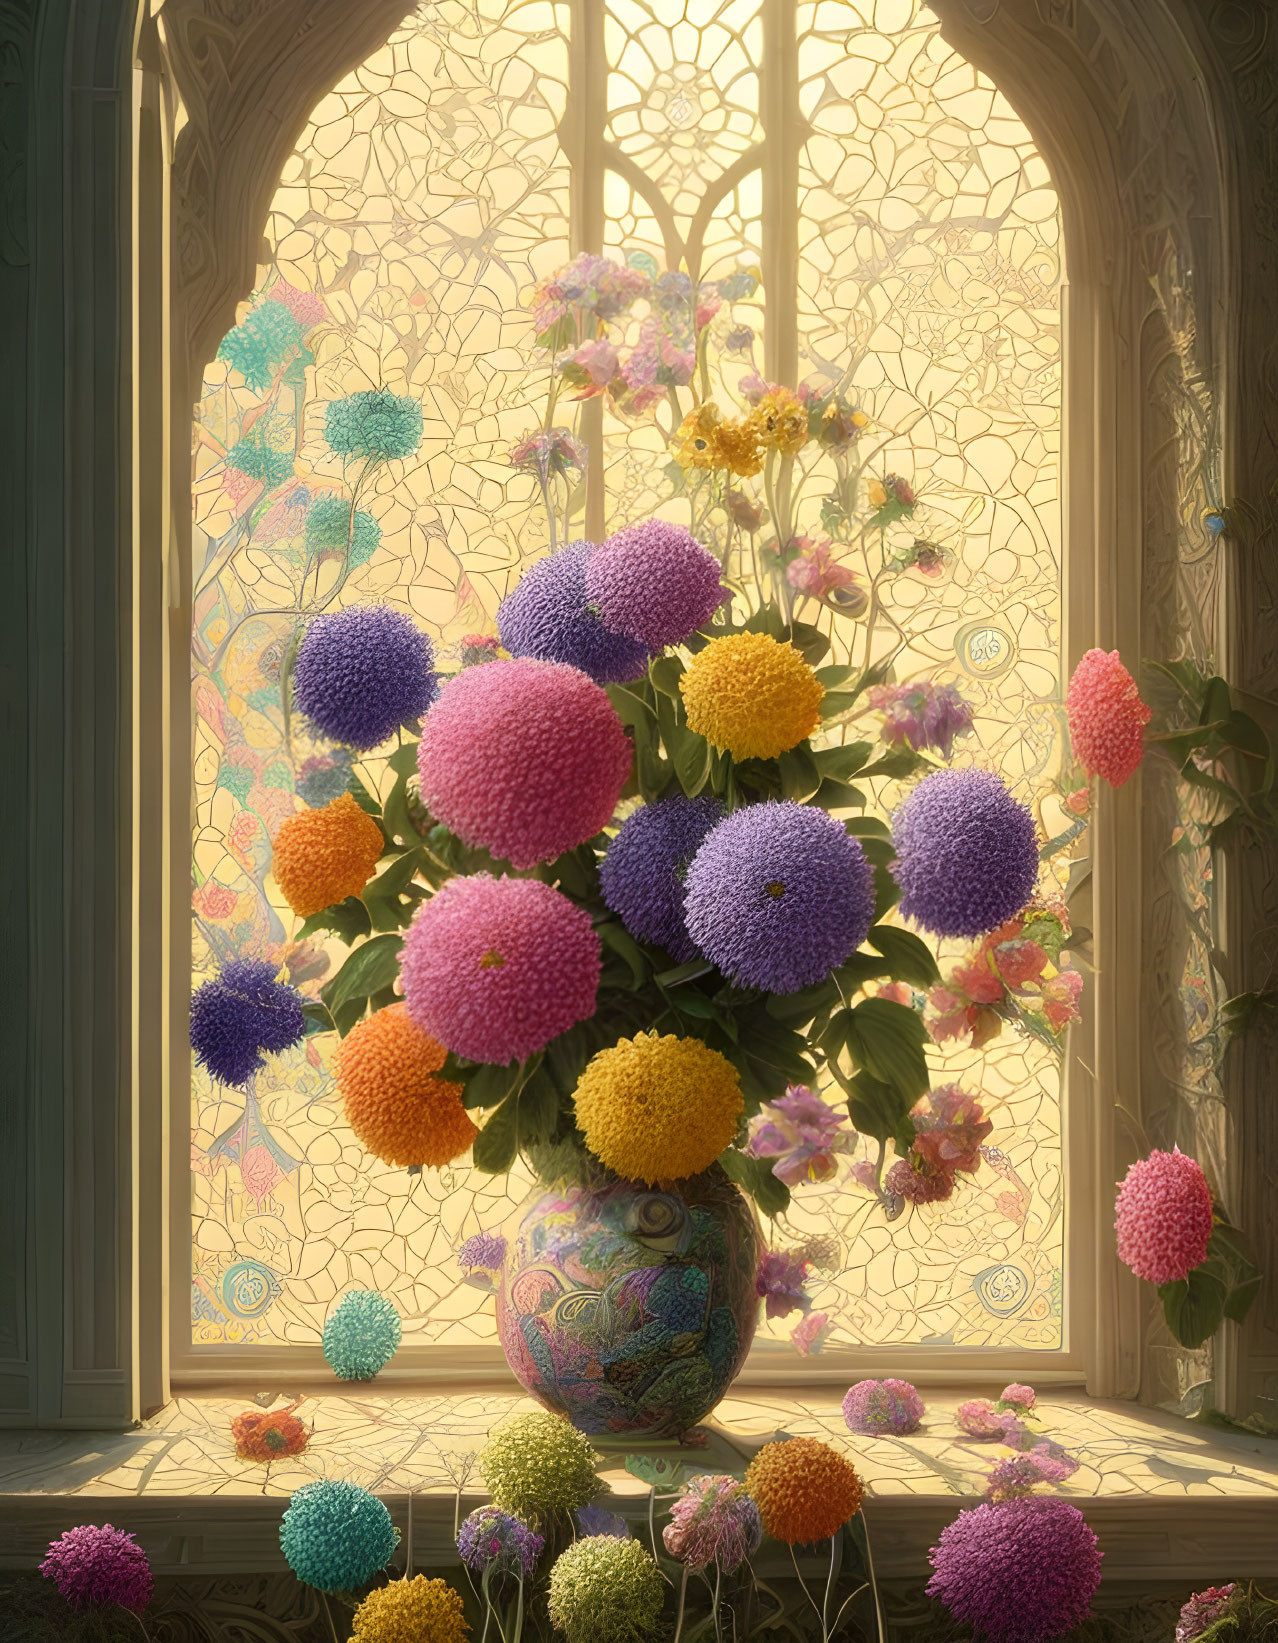 Colorful Flower Bouquet in Patterned Vase on Sunlit Windowsill